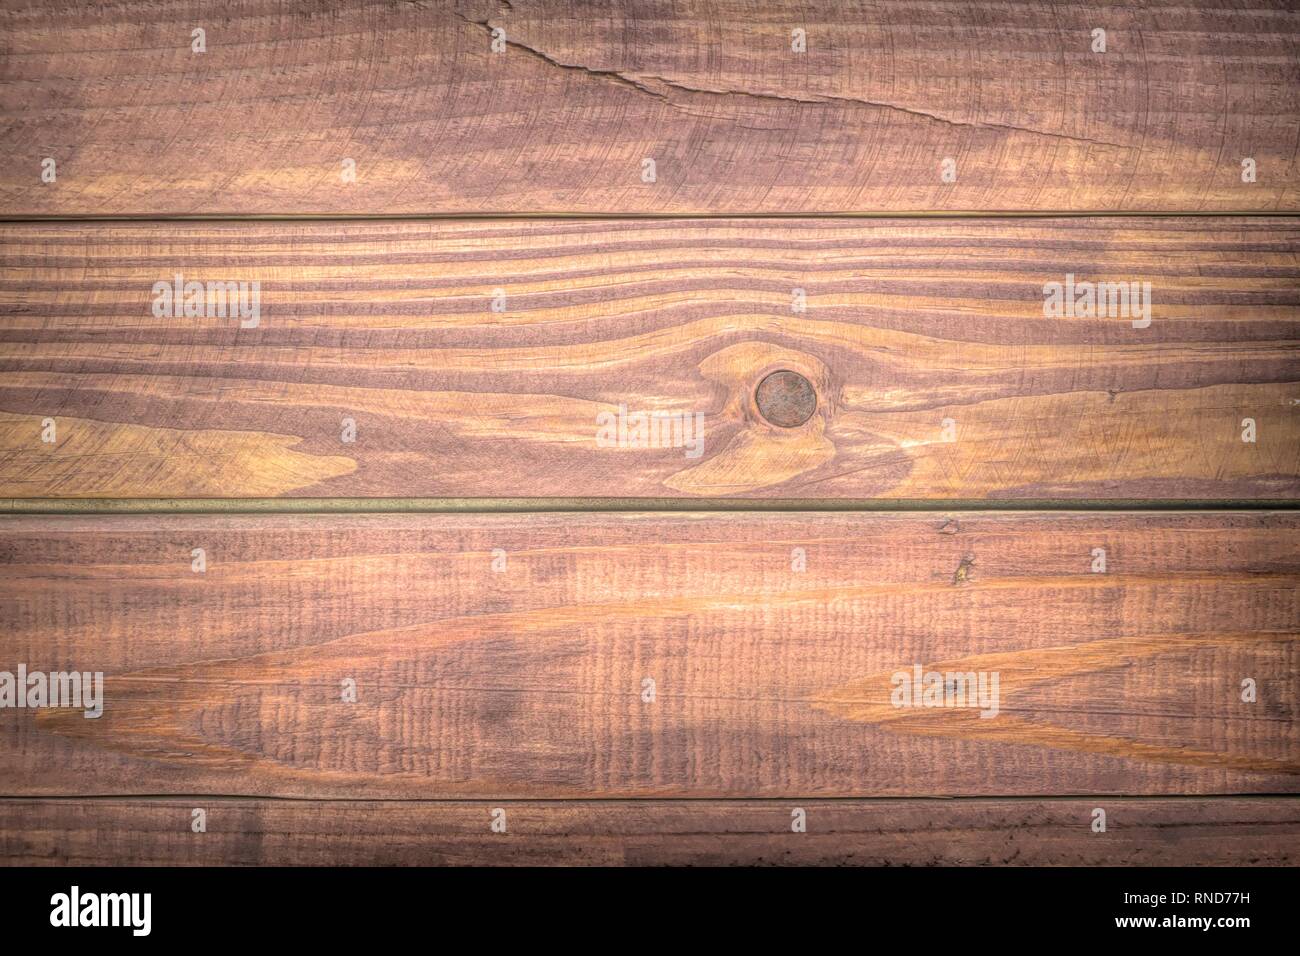 Wooden Boards or Slats Background - Brown Hardwood Floor -   Grunge High Definition Pattern Stock Photo